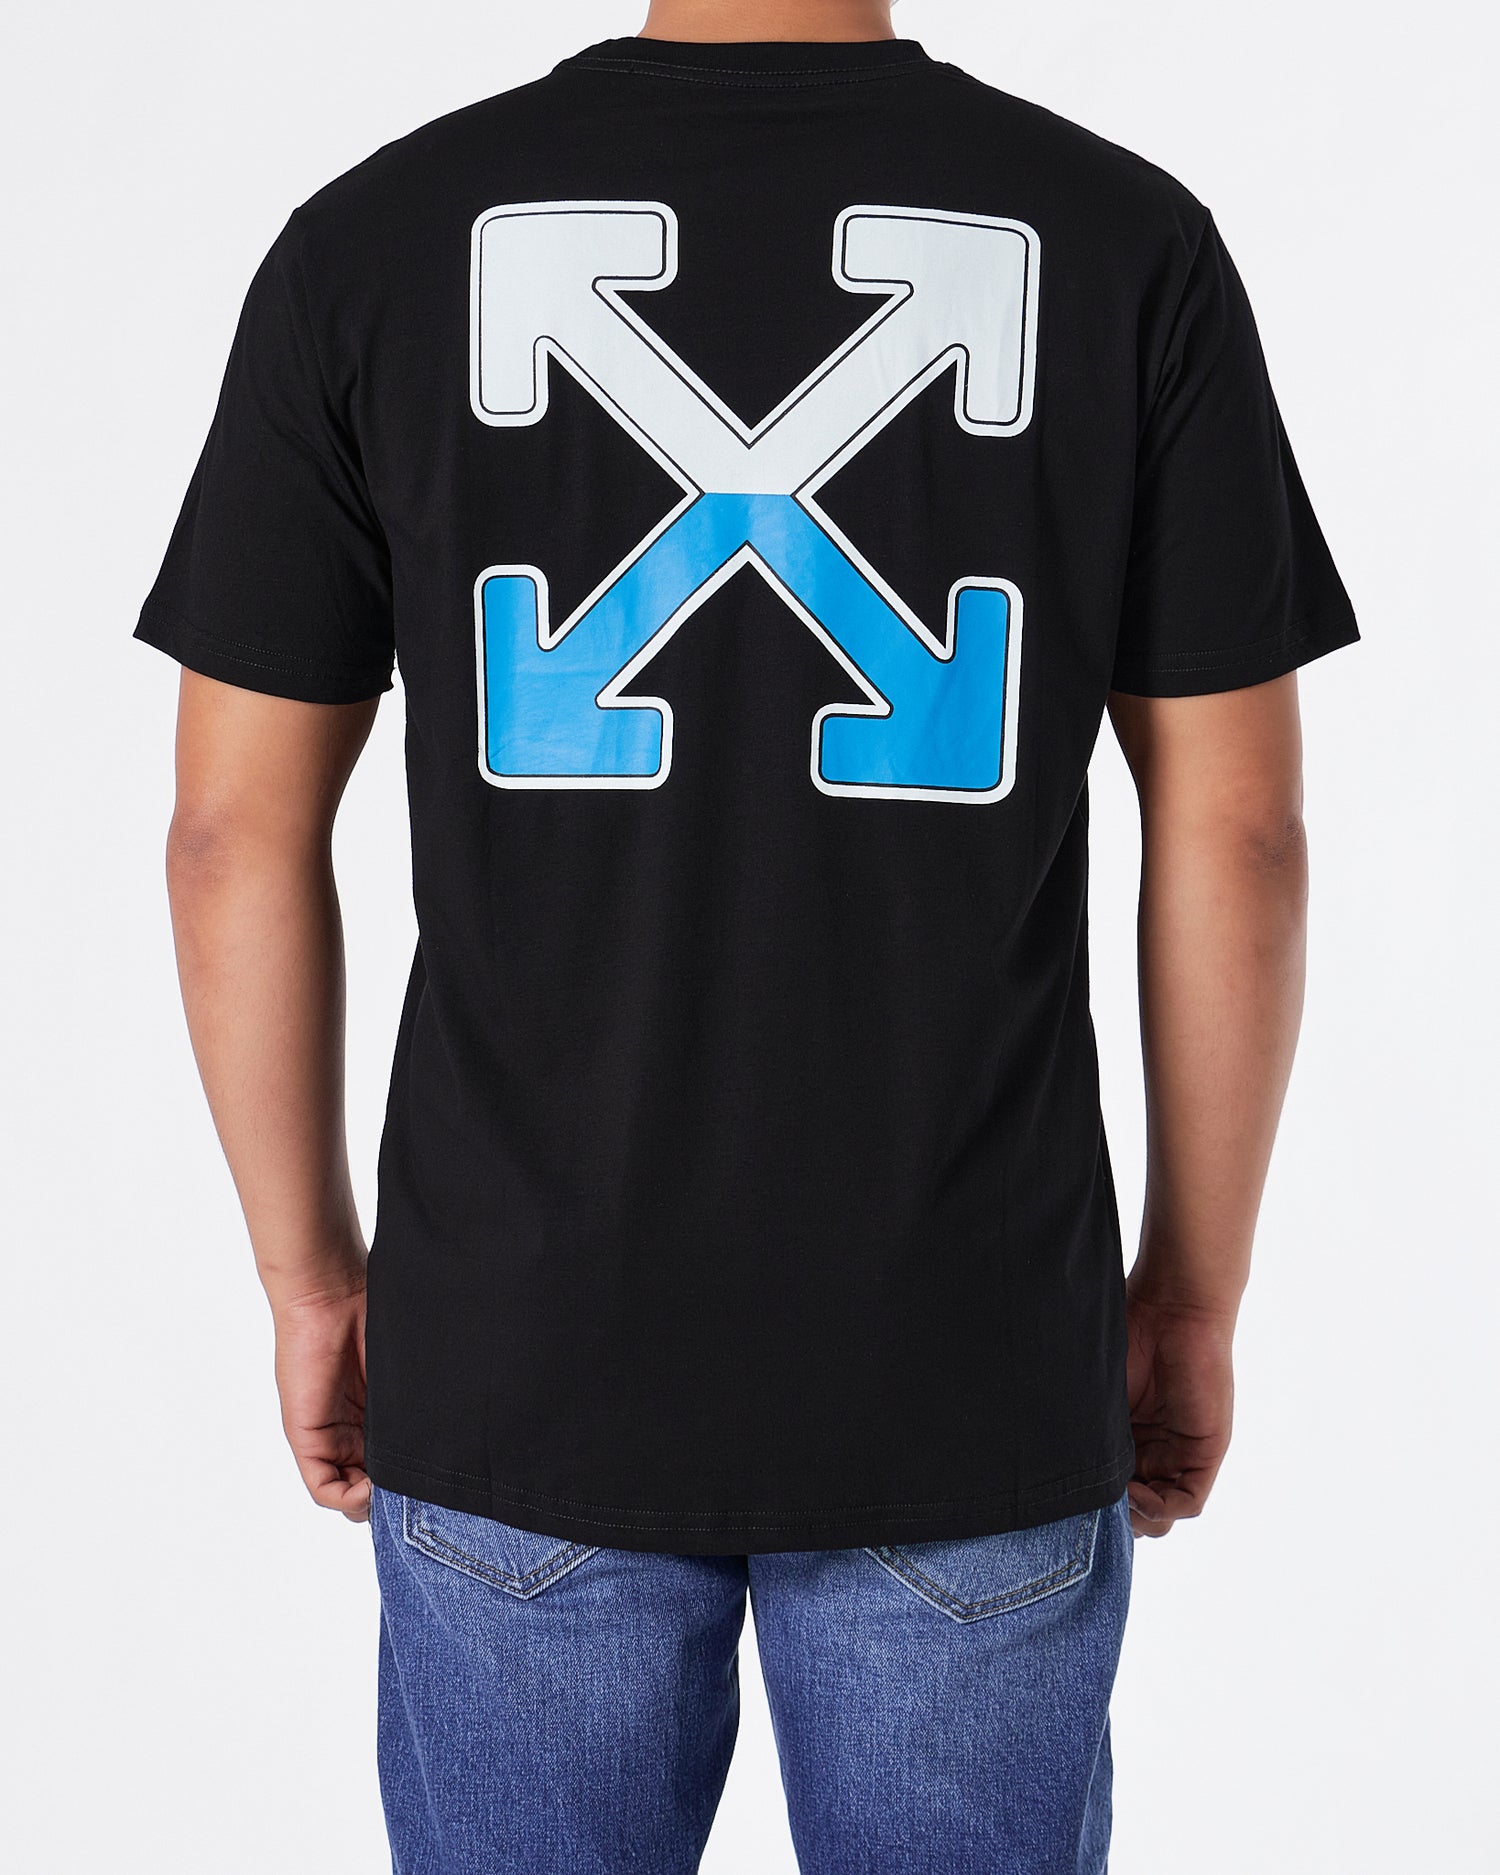 OW Cross Arrow Back Printed Men Black T-Shirt 19.90